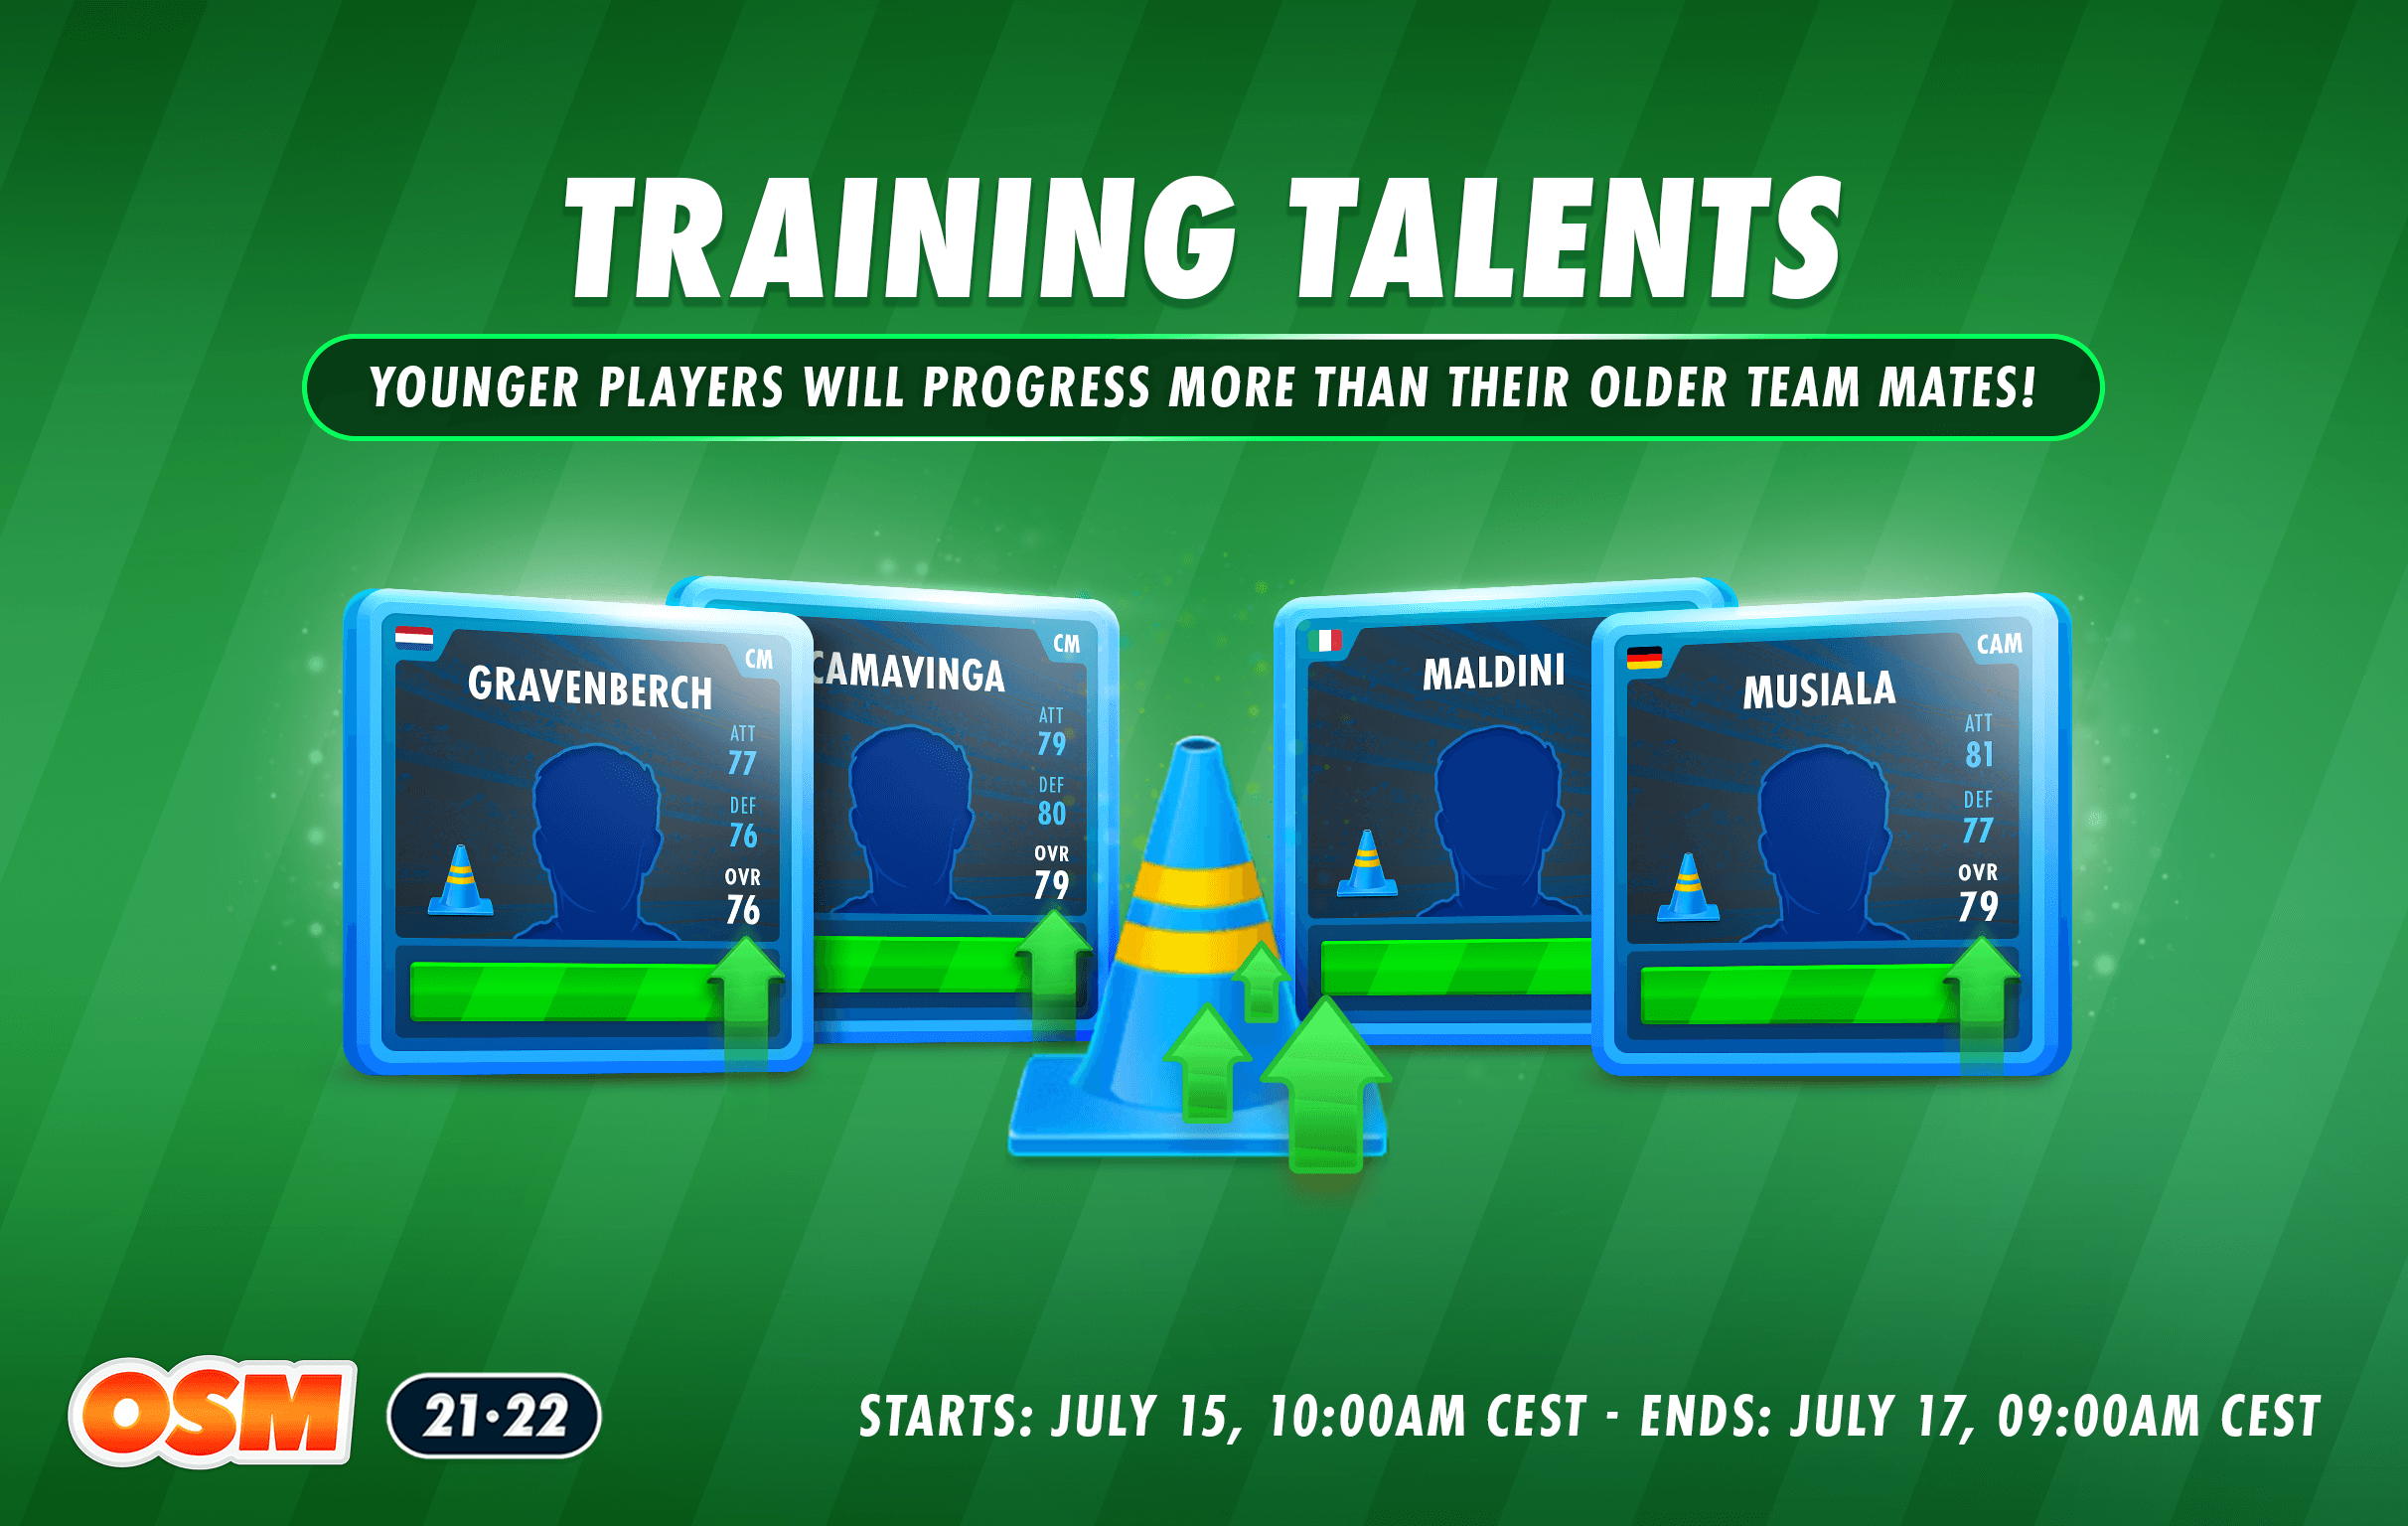 Forum_Training Talents_REDDIT (3).png